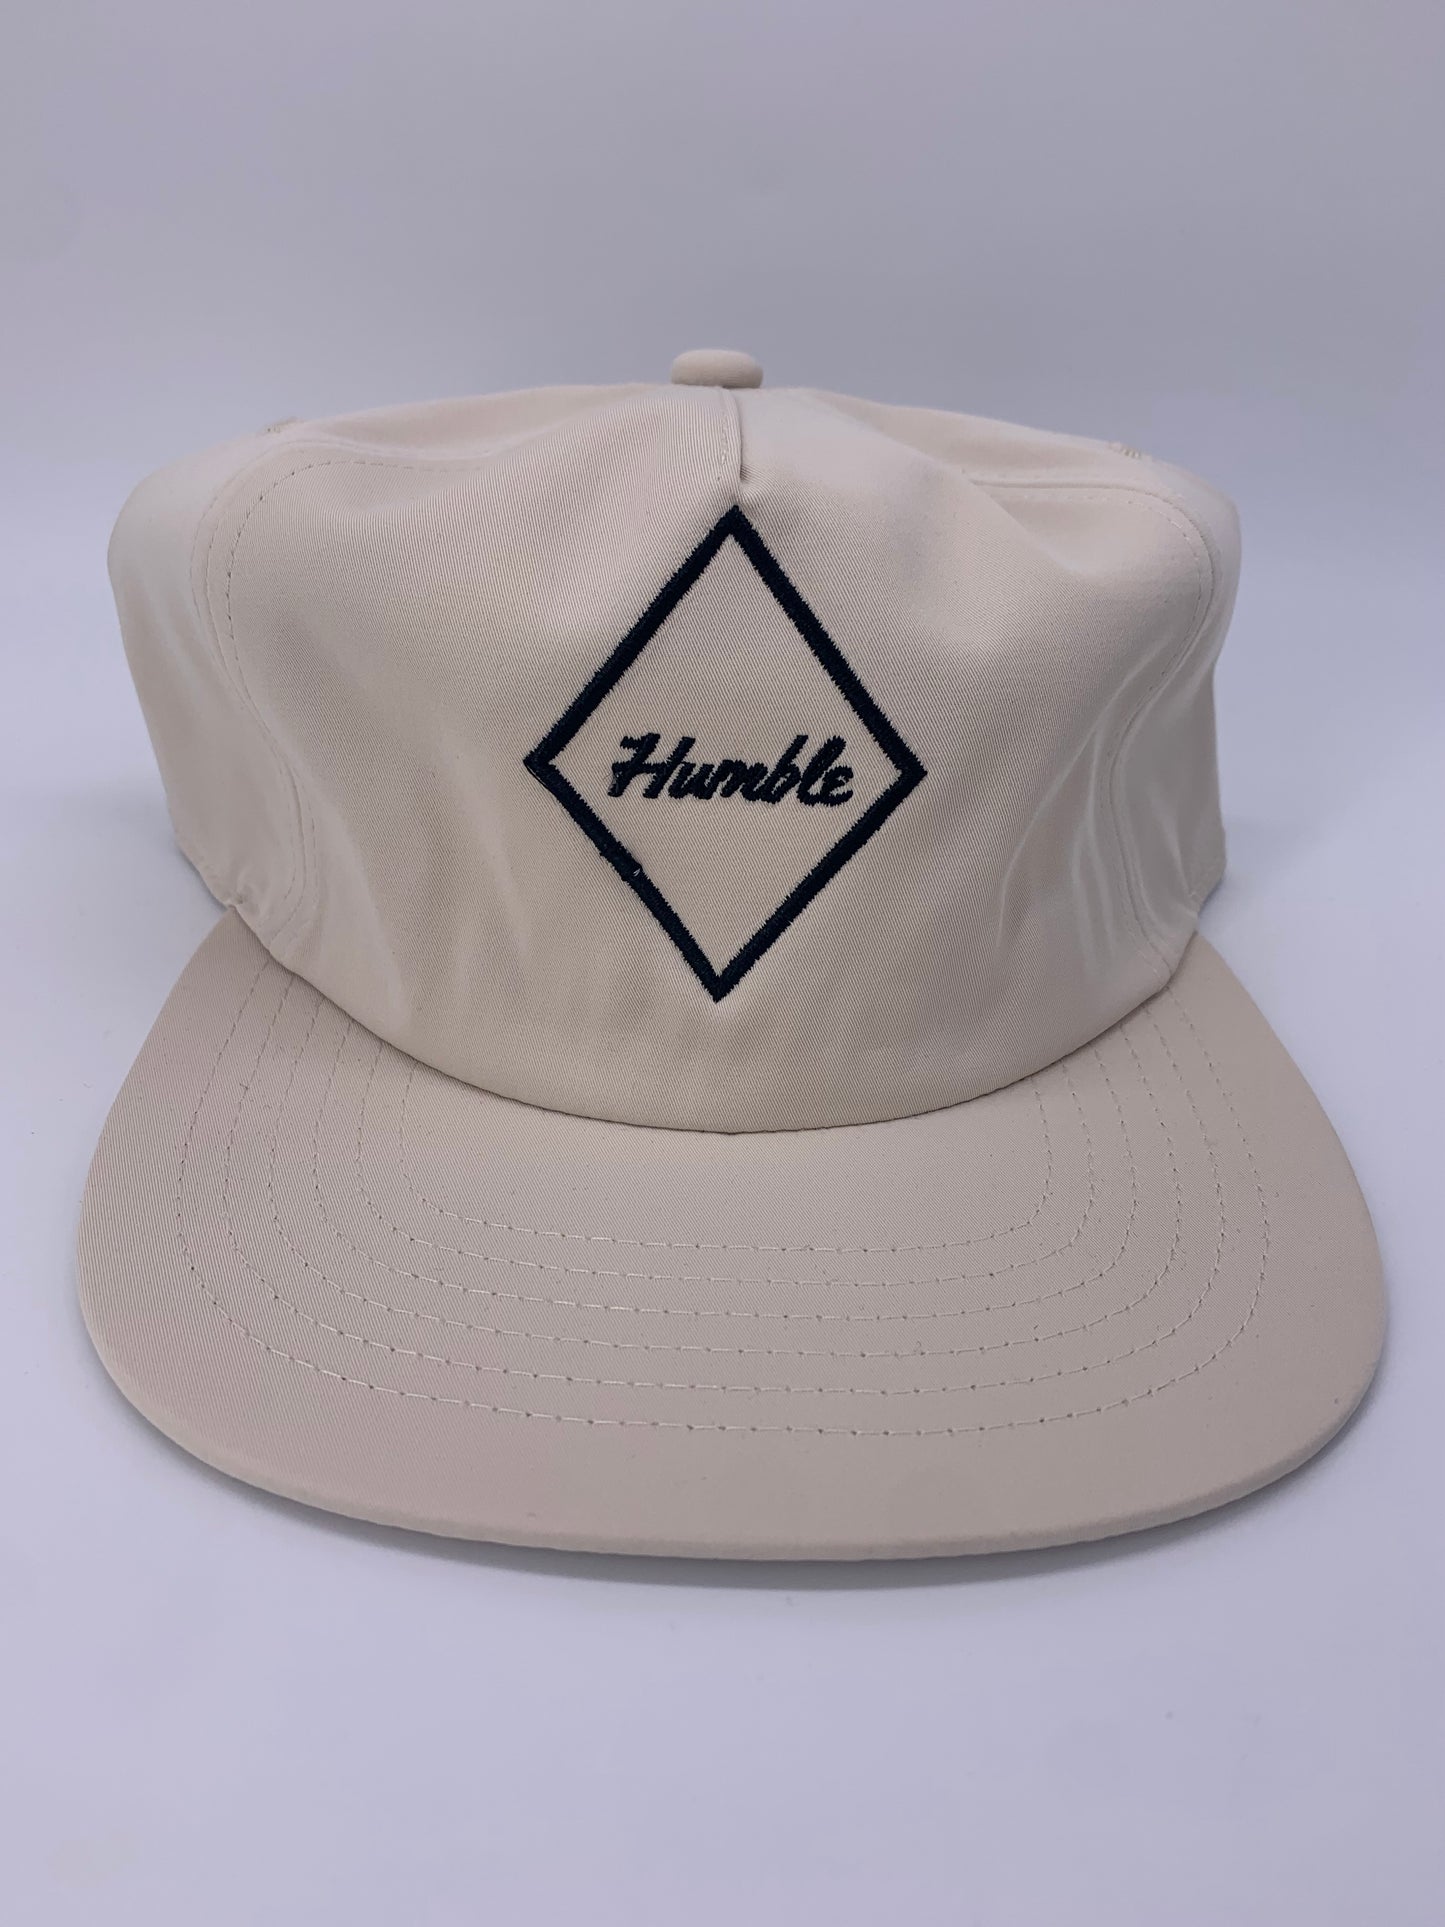 Humble Snap back Hat